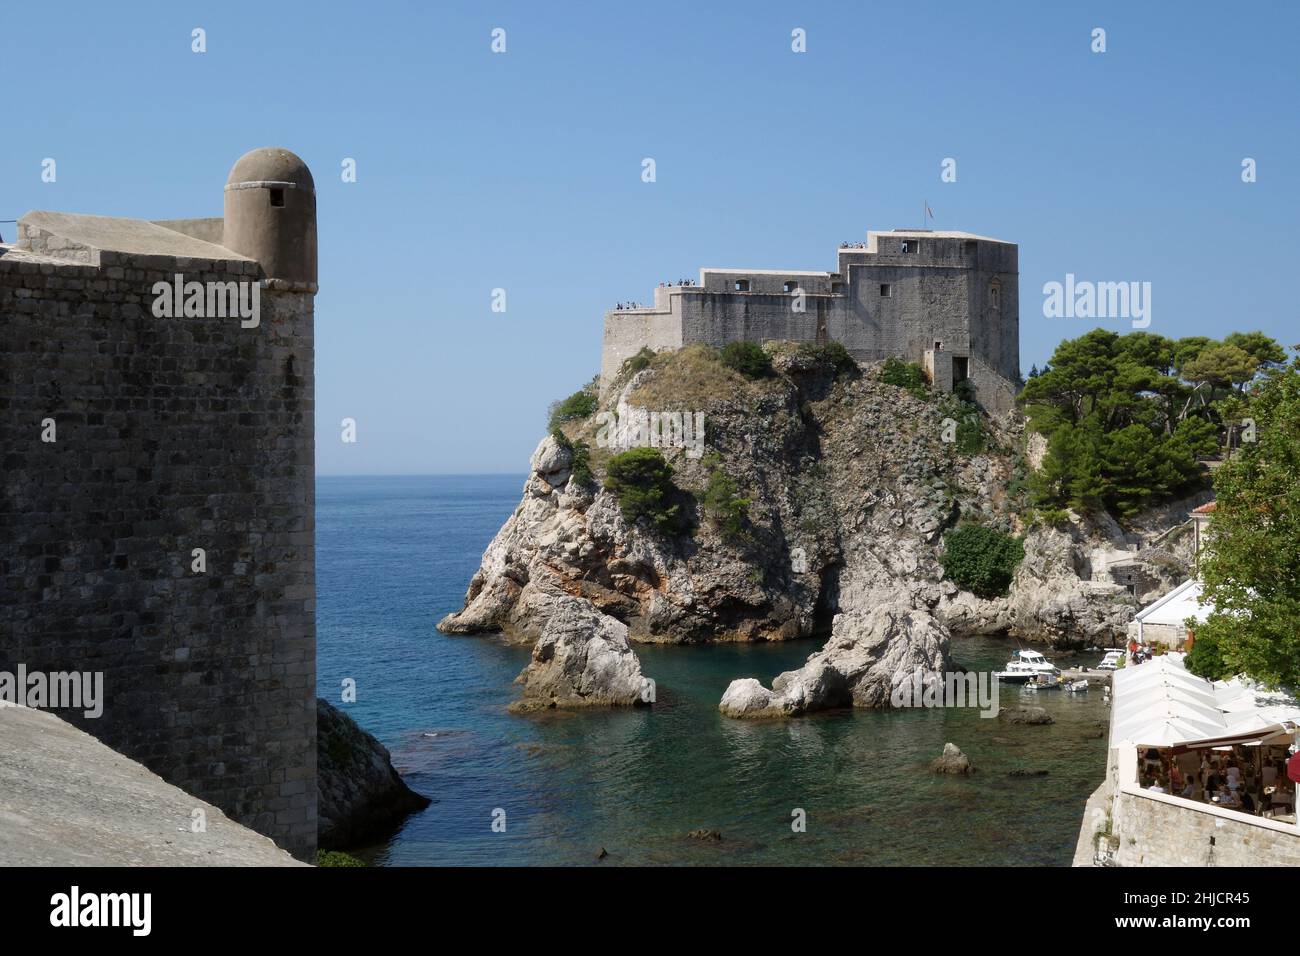 Forth Lovrijenac or the St Lawrence Fort, Dubrovnik. Stock Photo